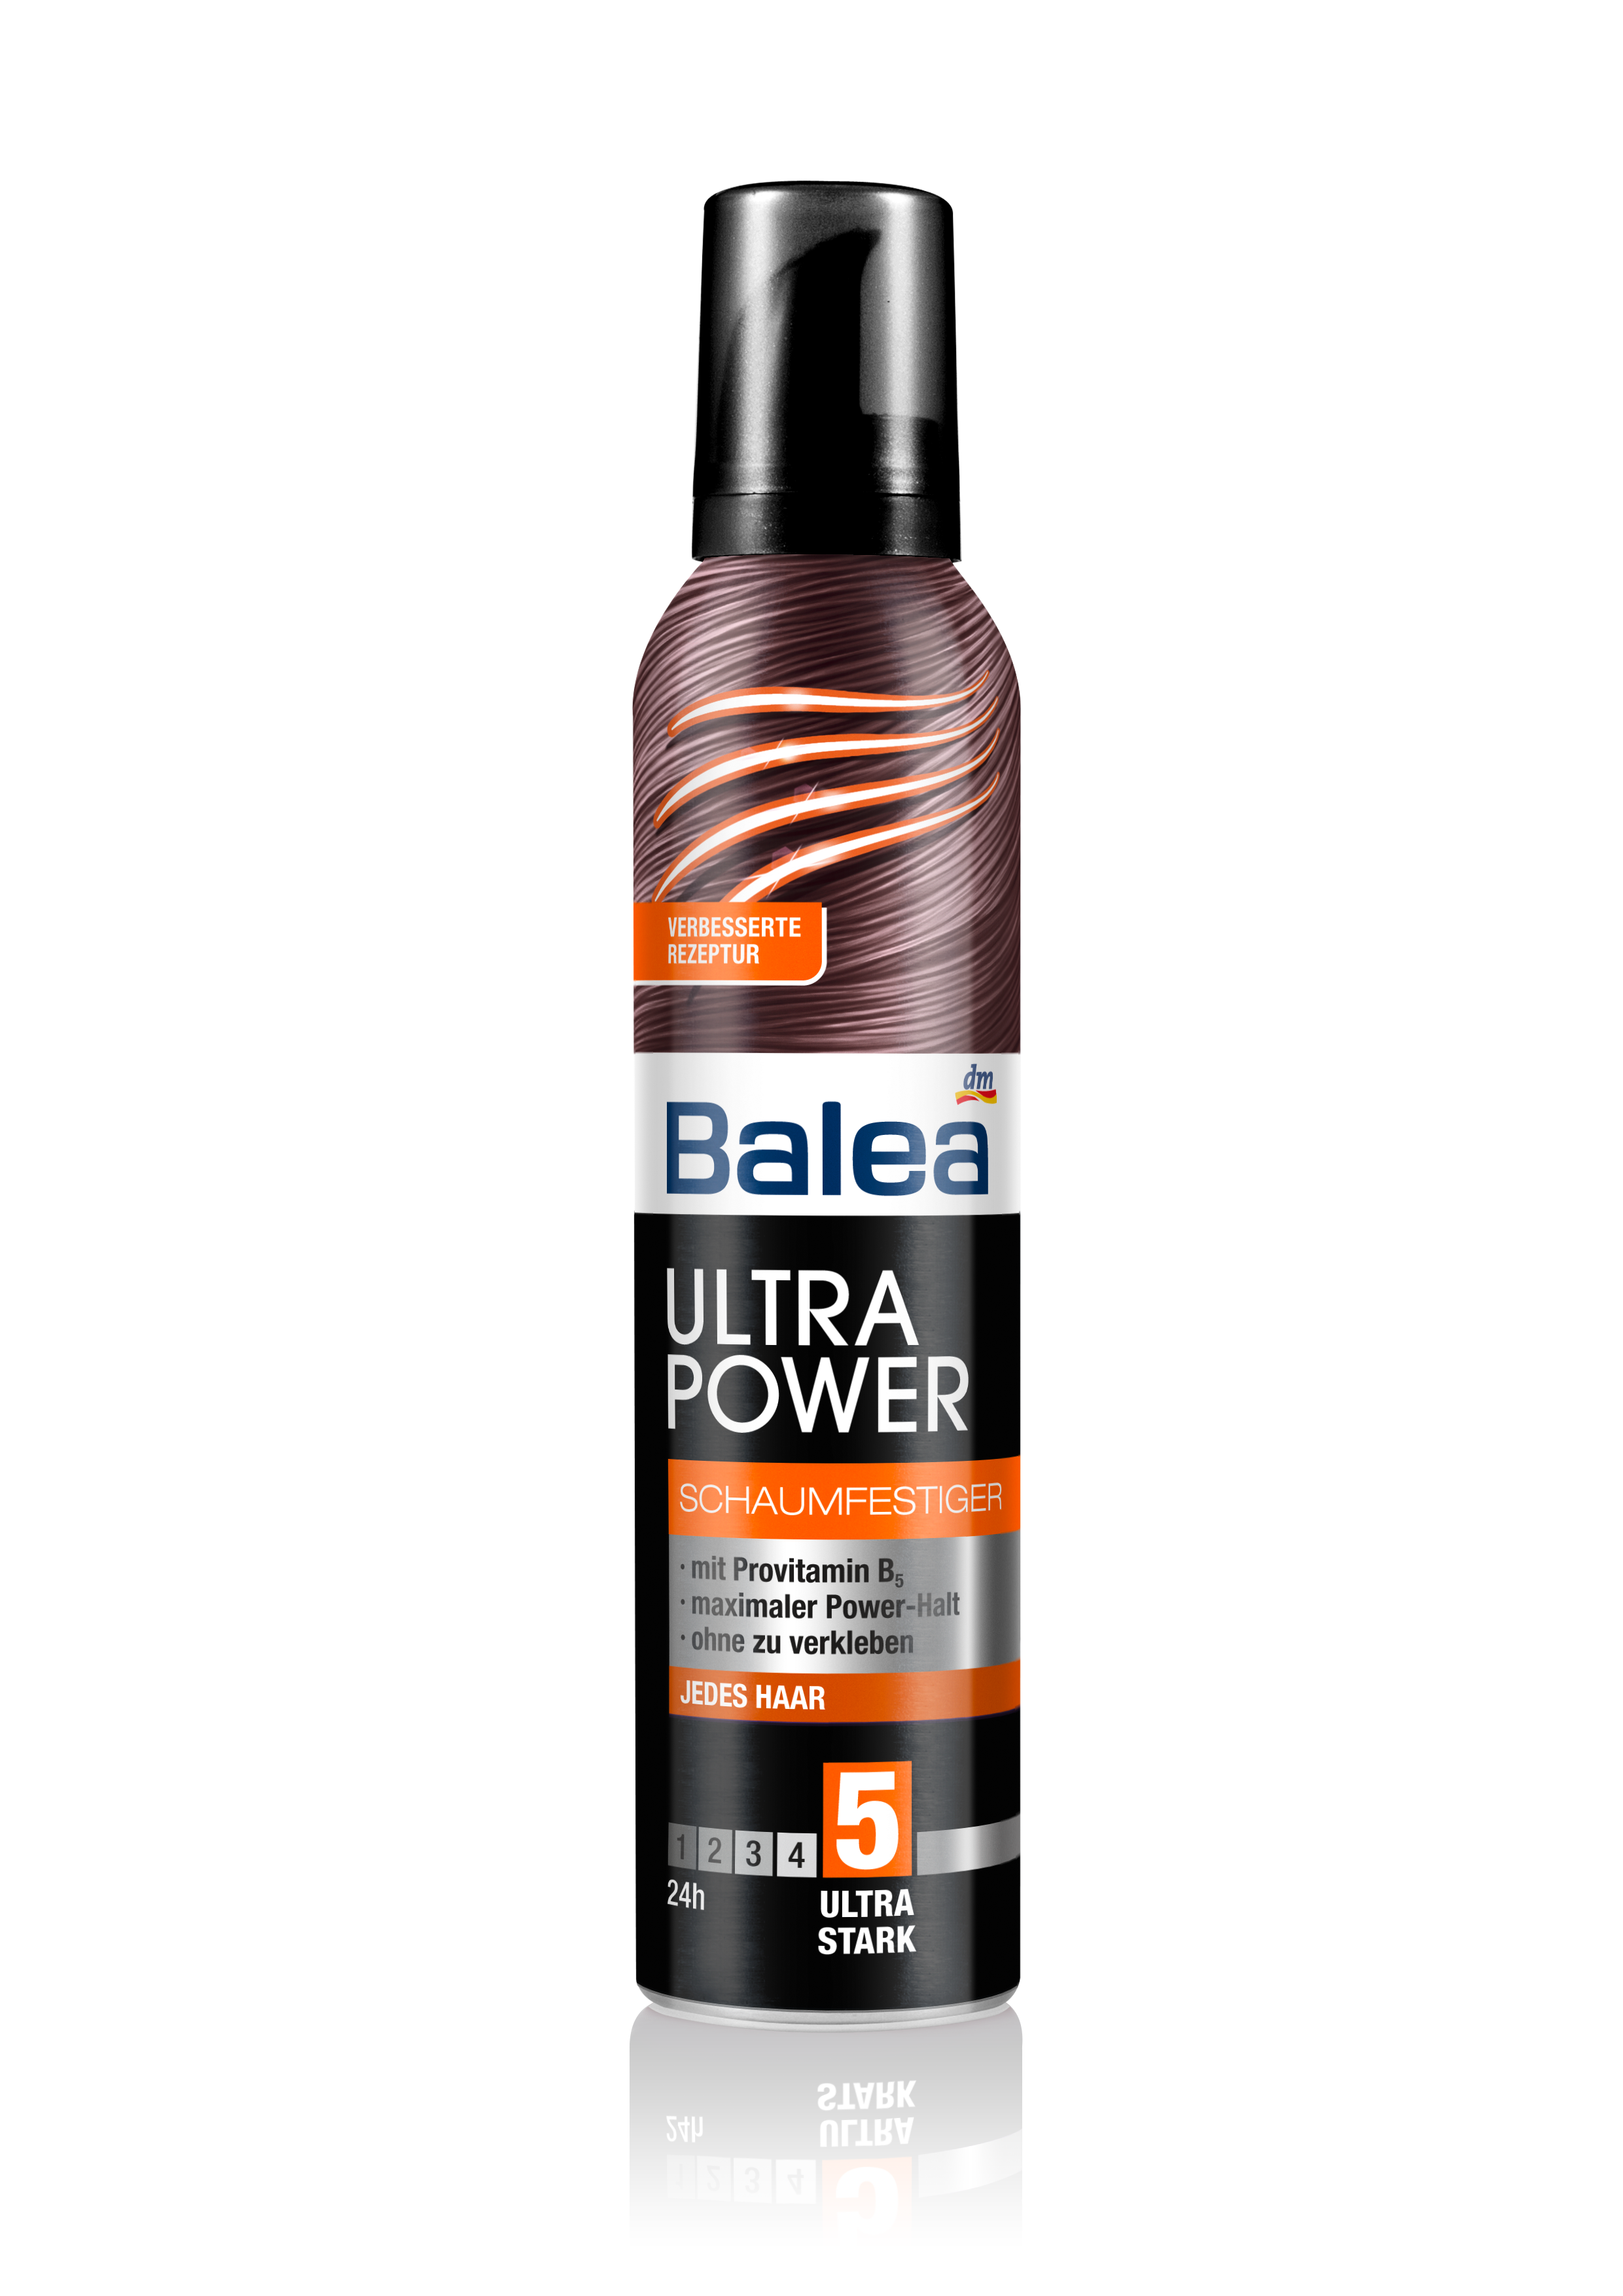 Ultra power купить. Balea Ultra Volume Spray. Balea hair Spray. Пена для волос Balea. Balea мусс для волос.